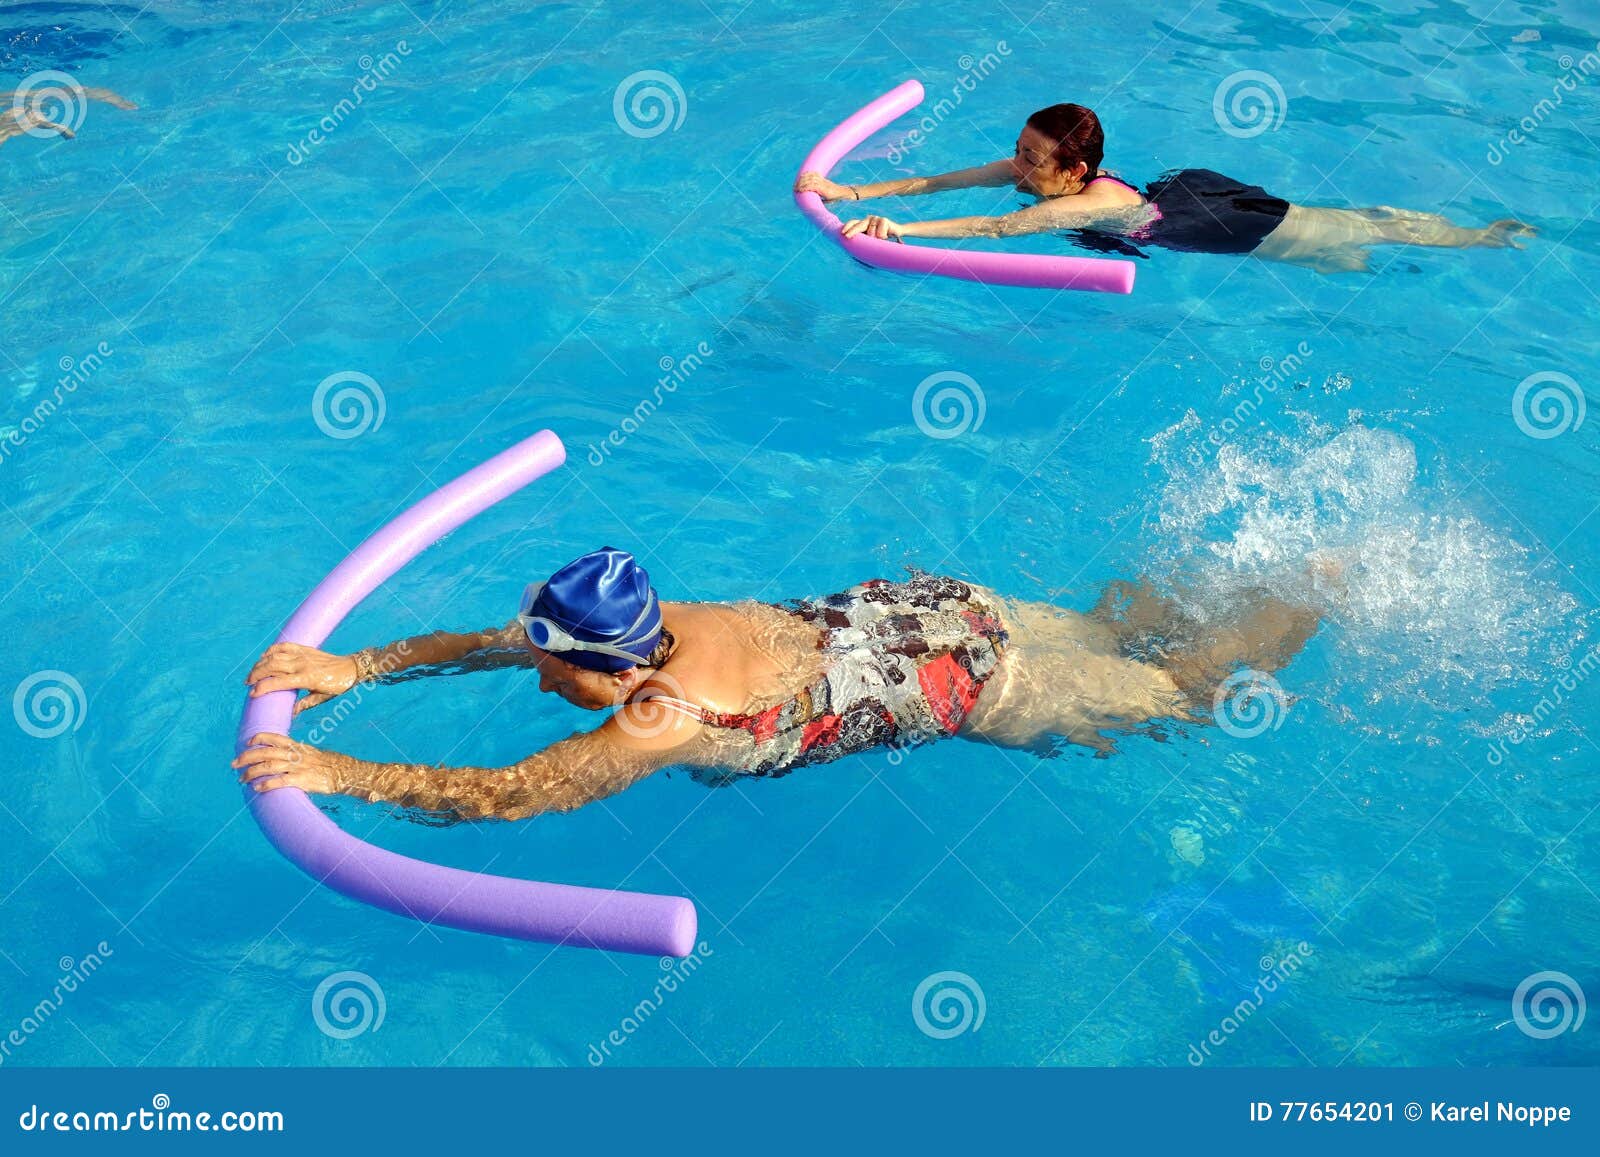 two senior women doing swimming exercise in pool.